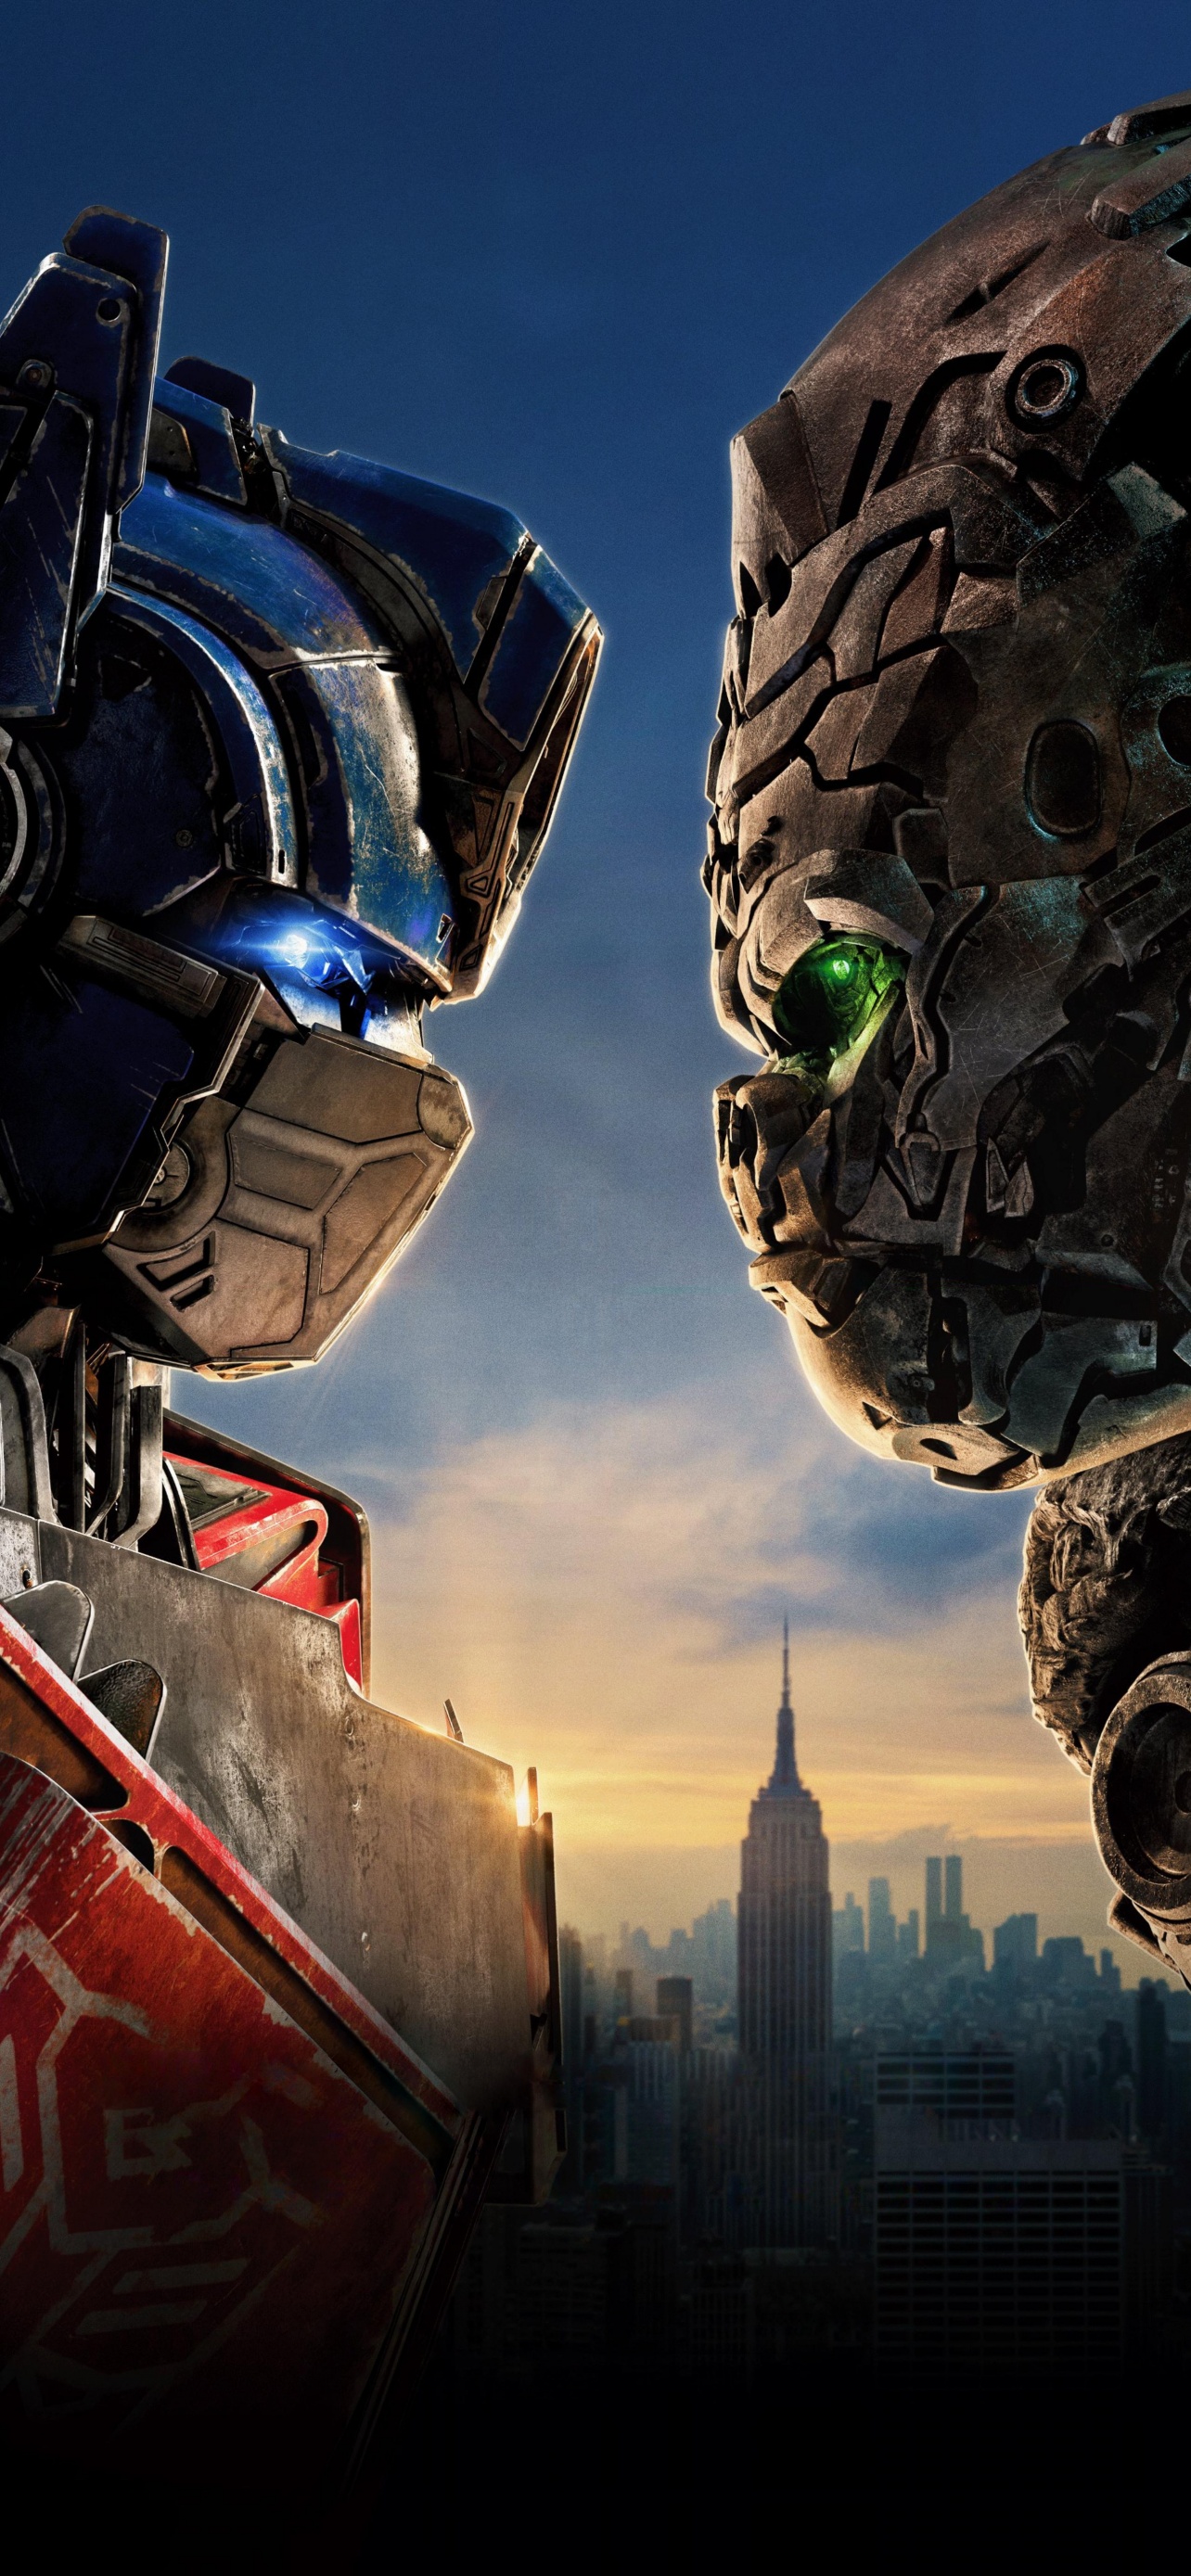 Wallpaper Transformers The Last Knight Transformers 5 5k Movies 14151